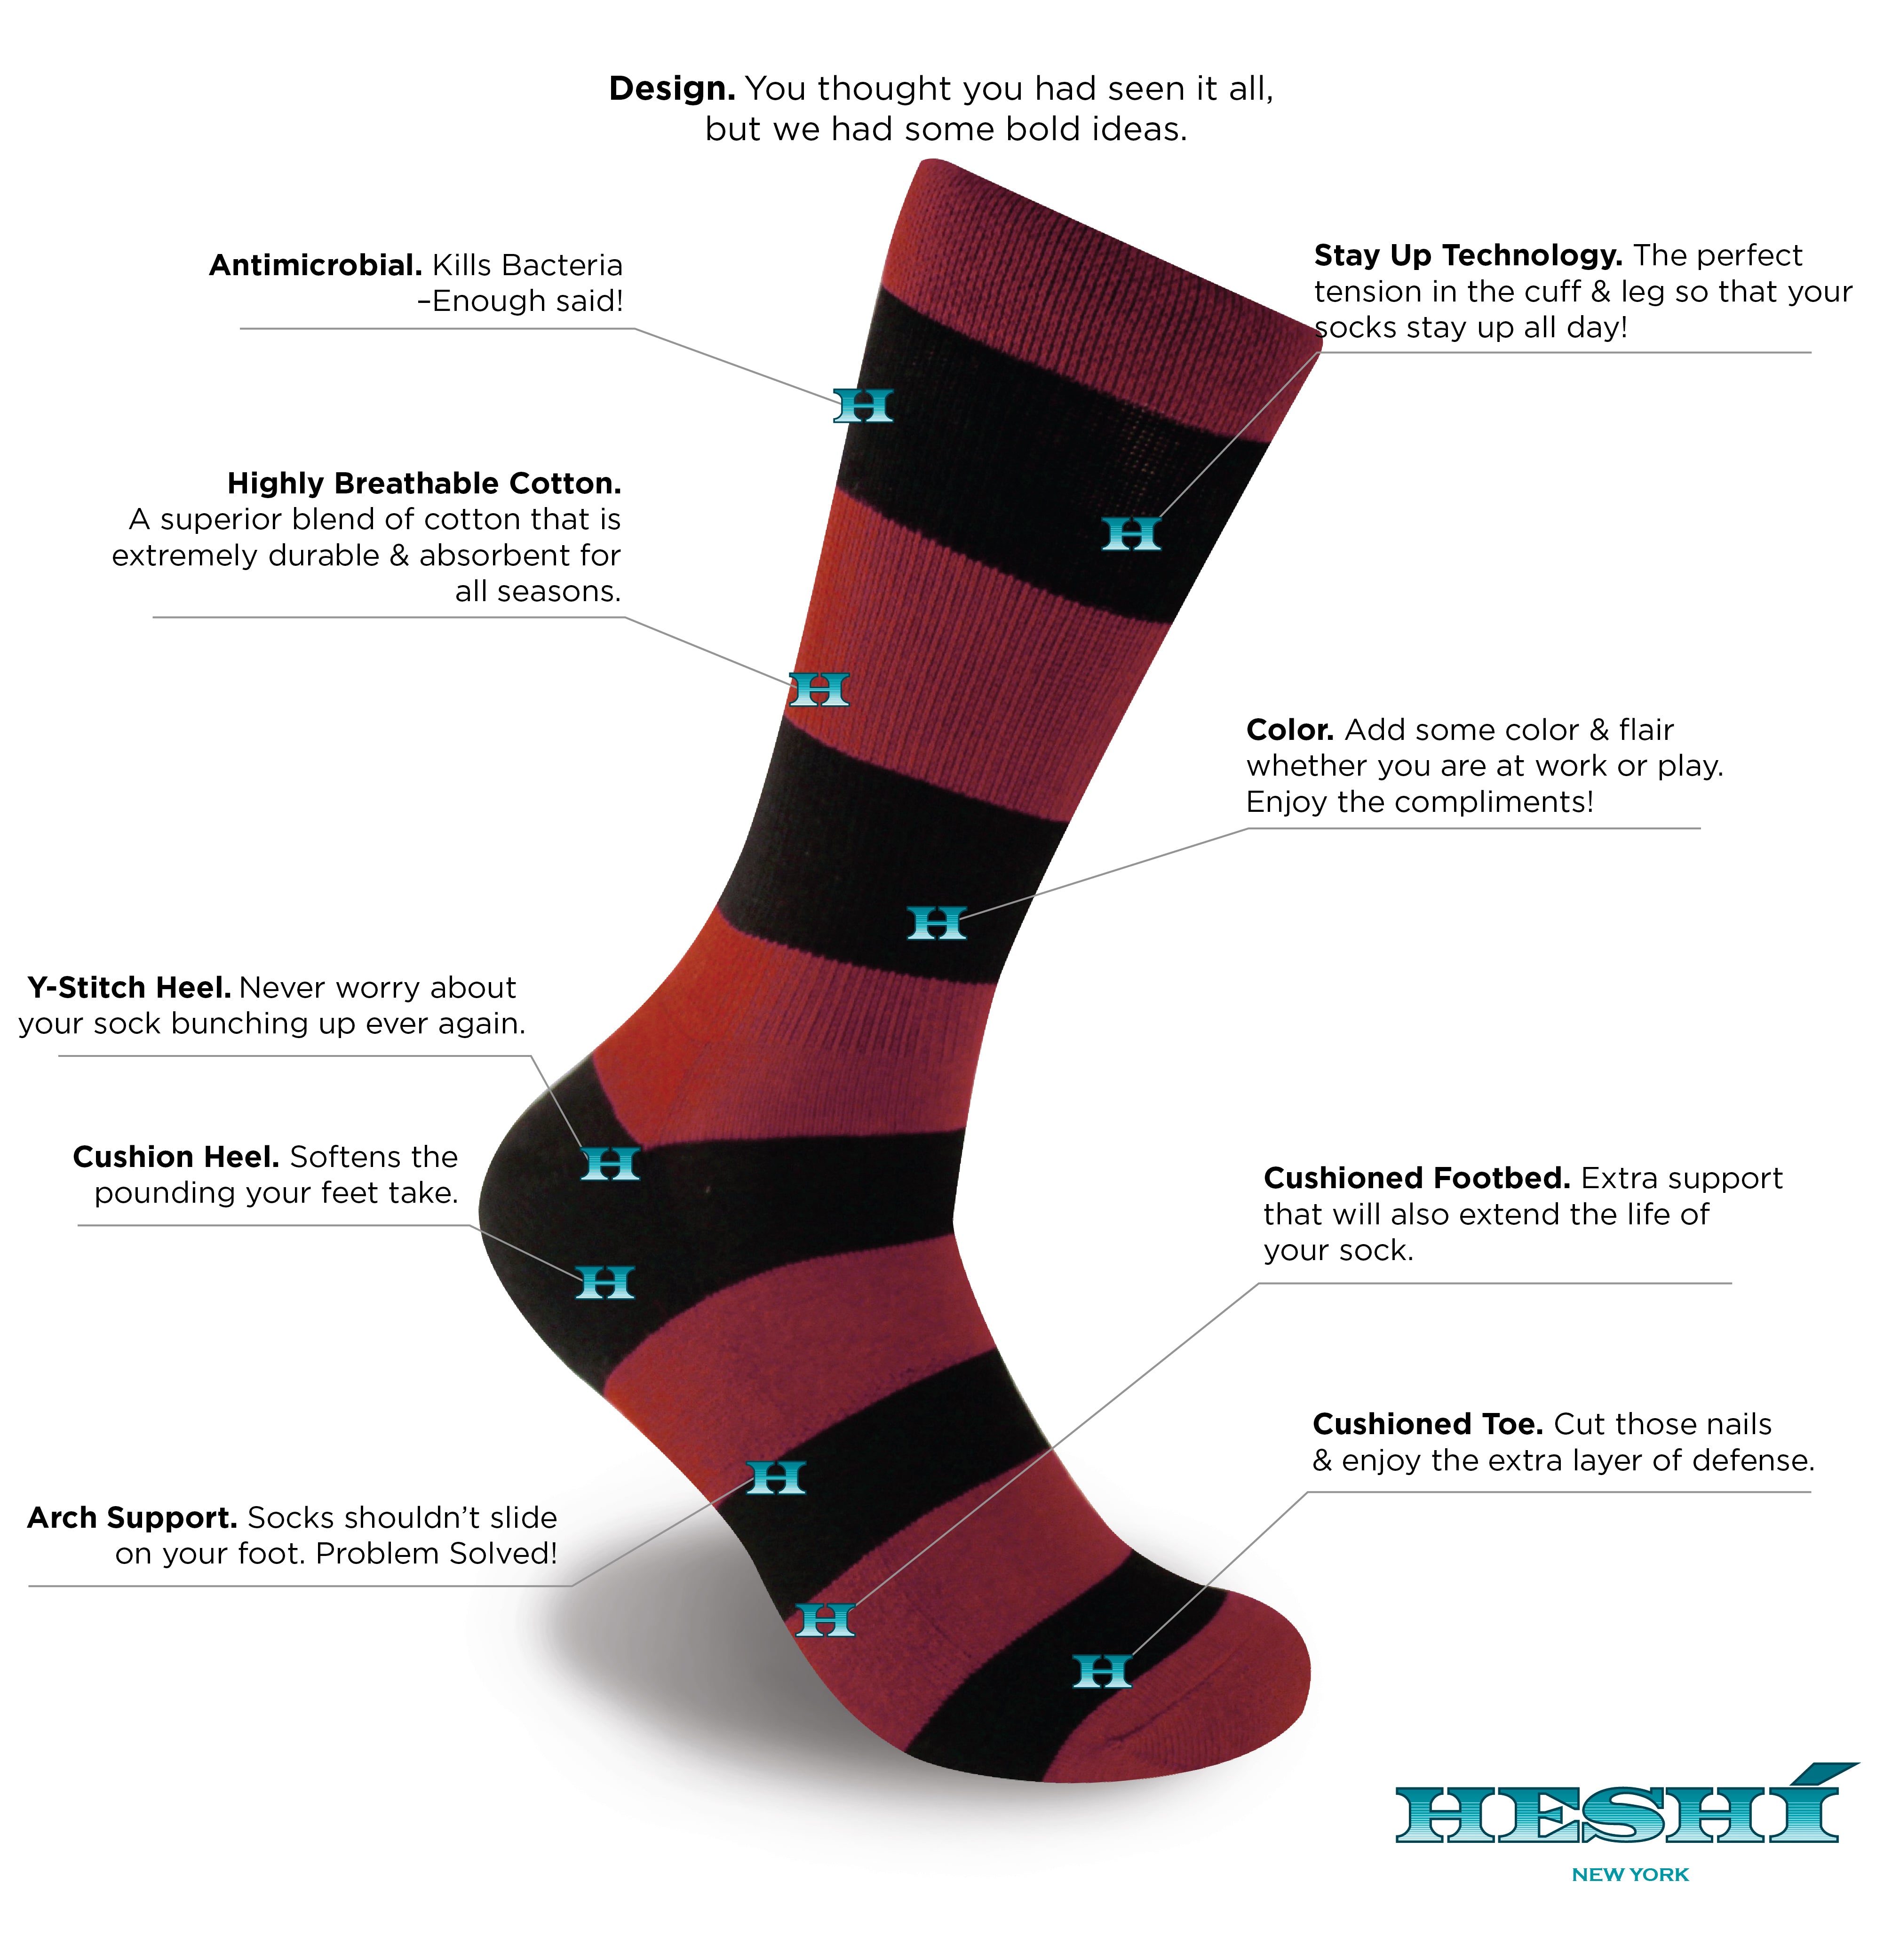 Rainbow Striped Pattern Toe Socks (Adult Medium) - Pink Accent